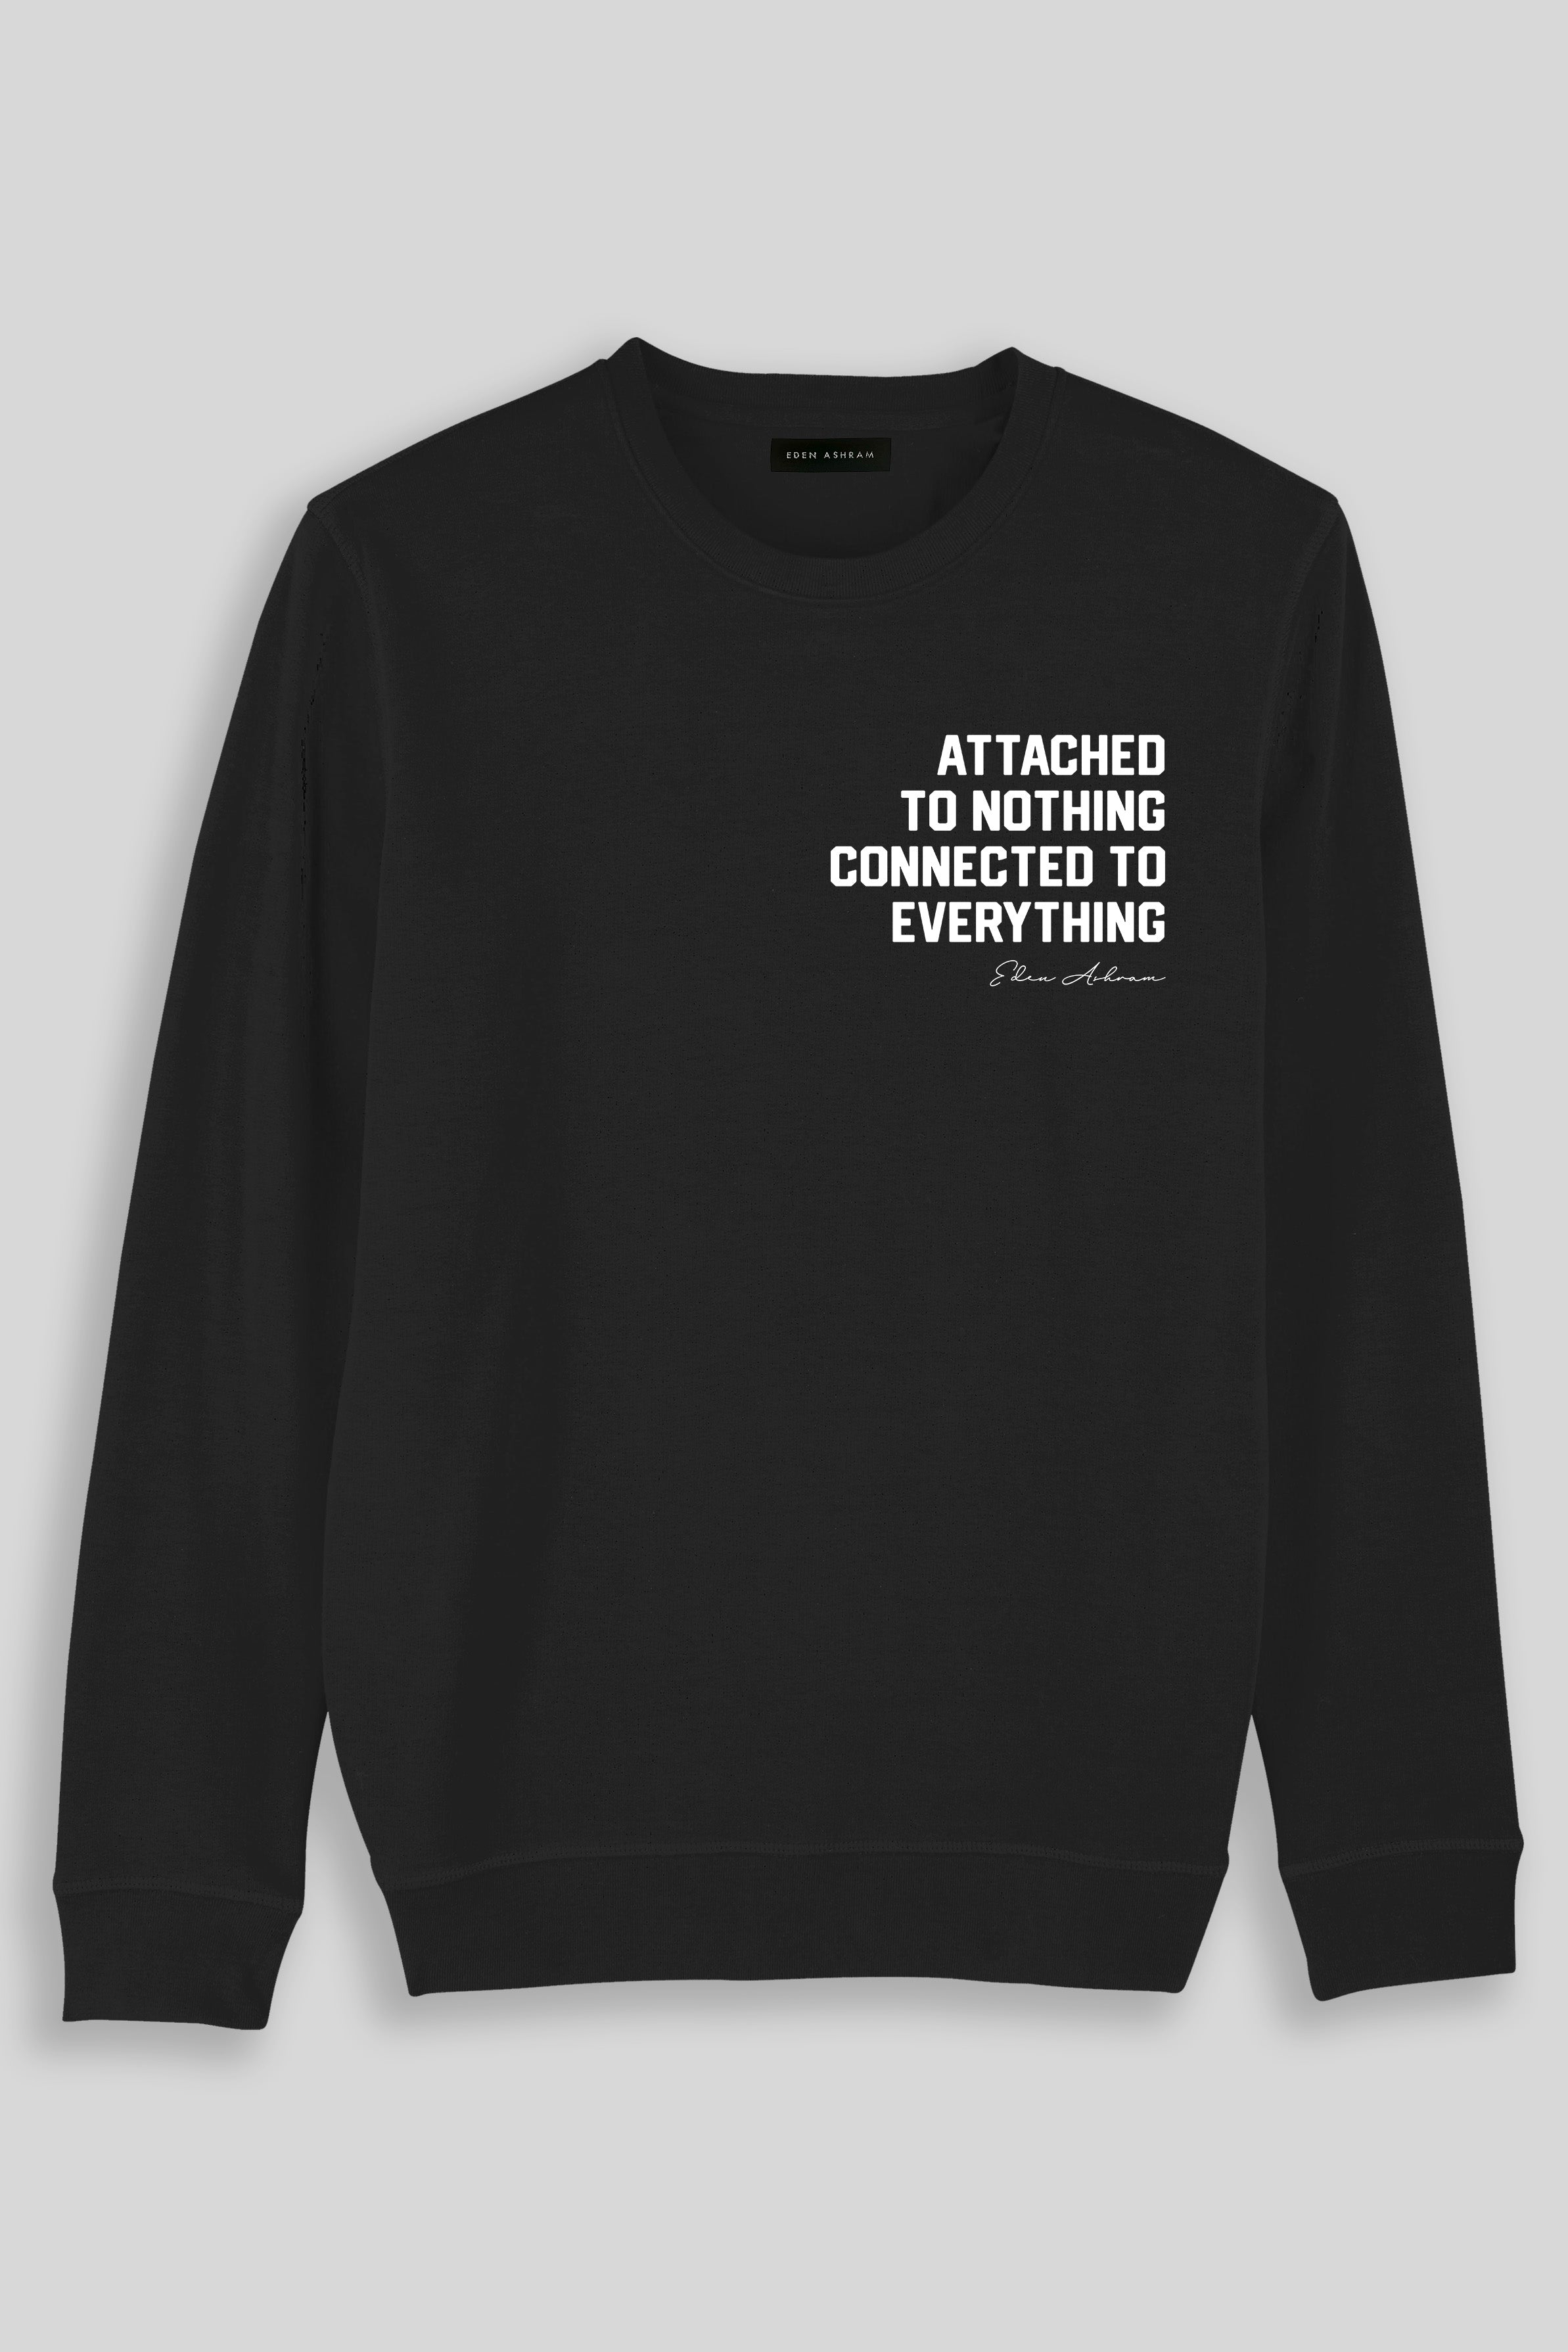 Eden Ashram Attached To Nothing Connected To Everything Premium Crew Neck Sweatshirt Vintage Black